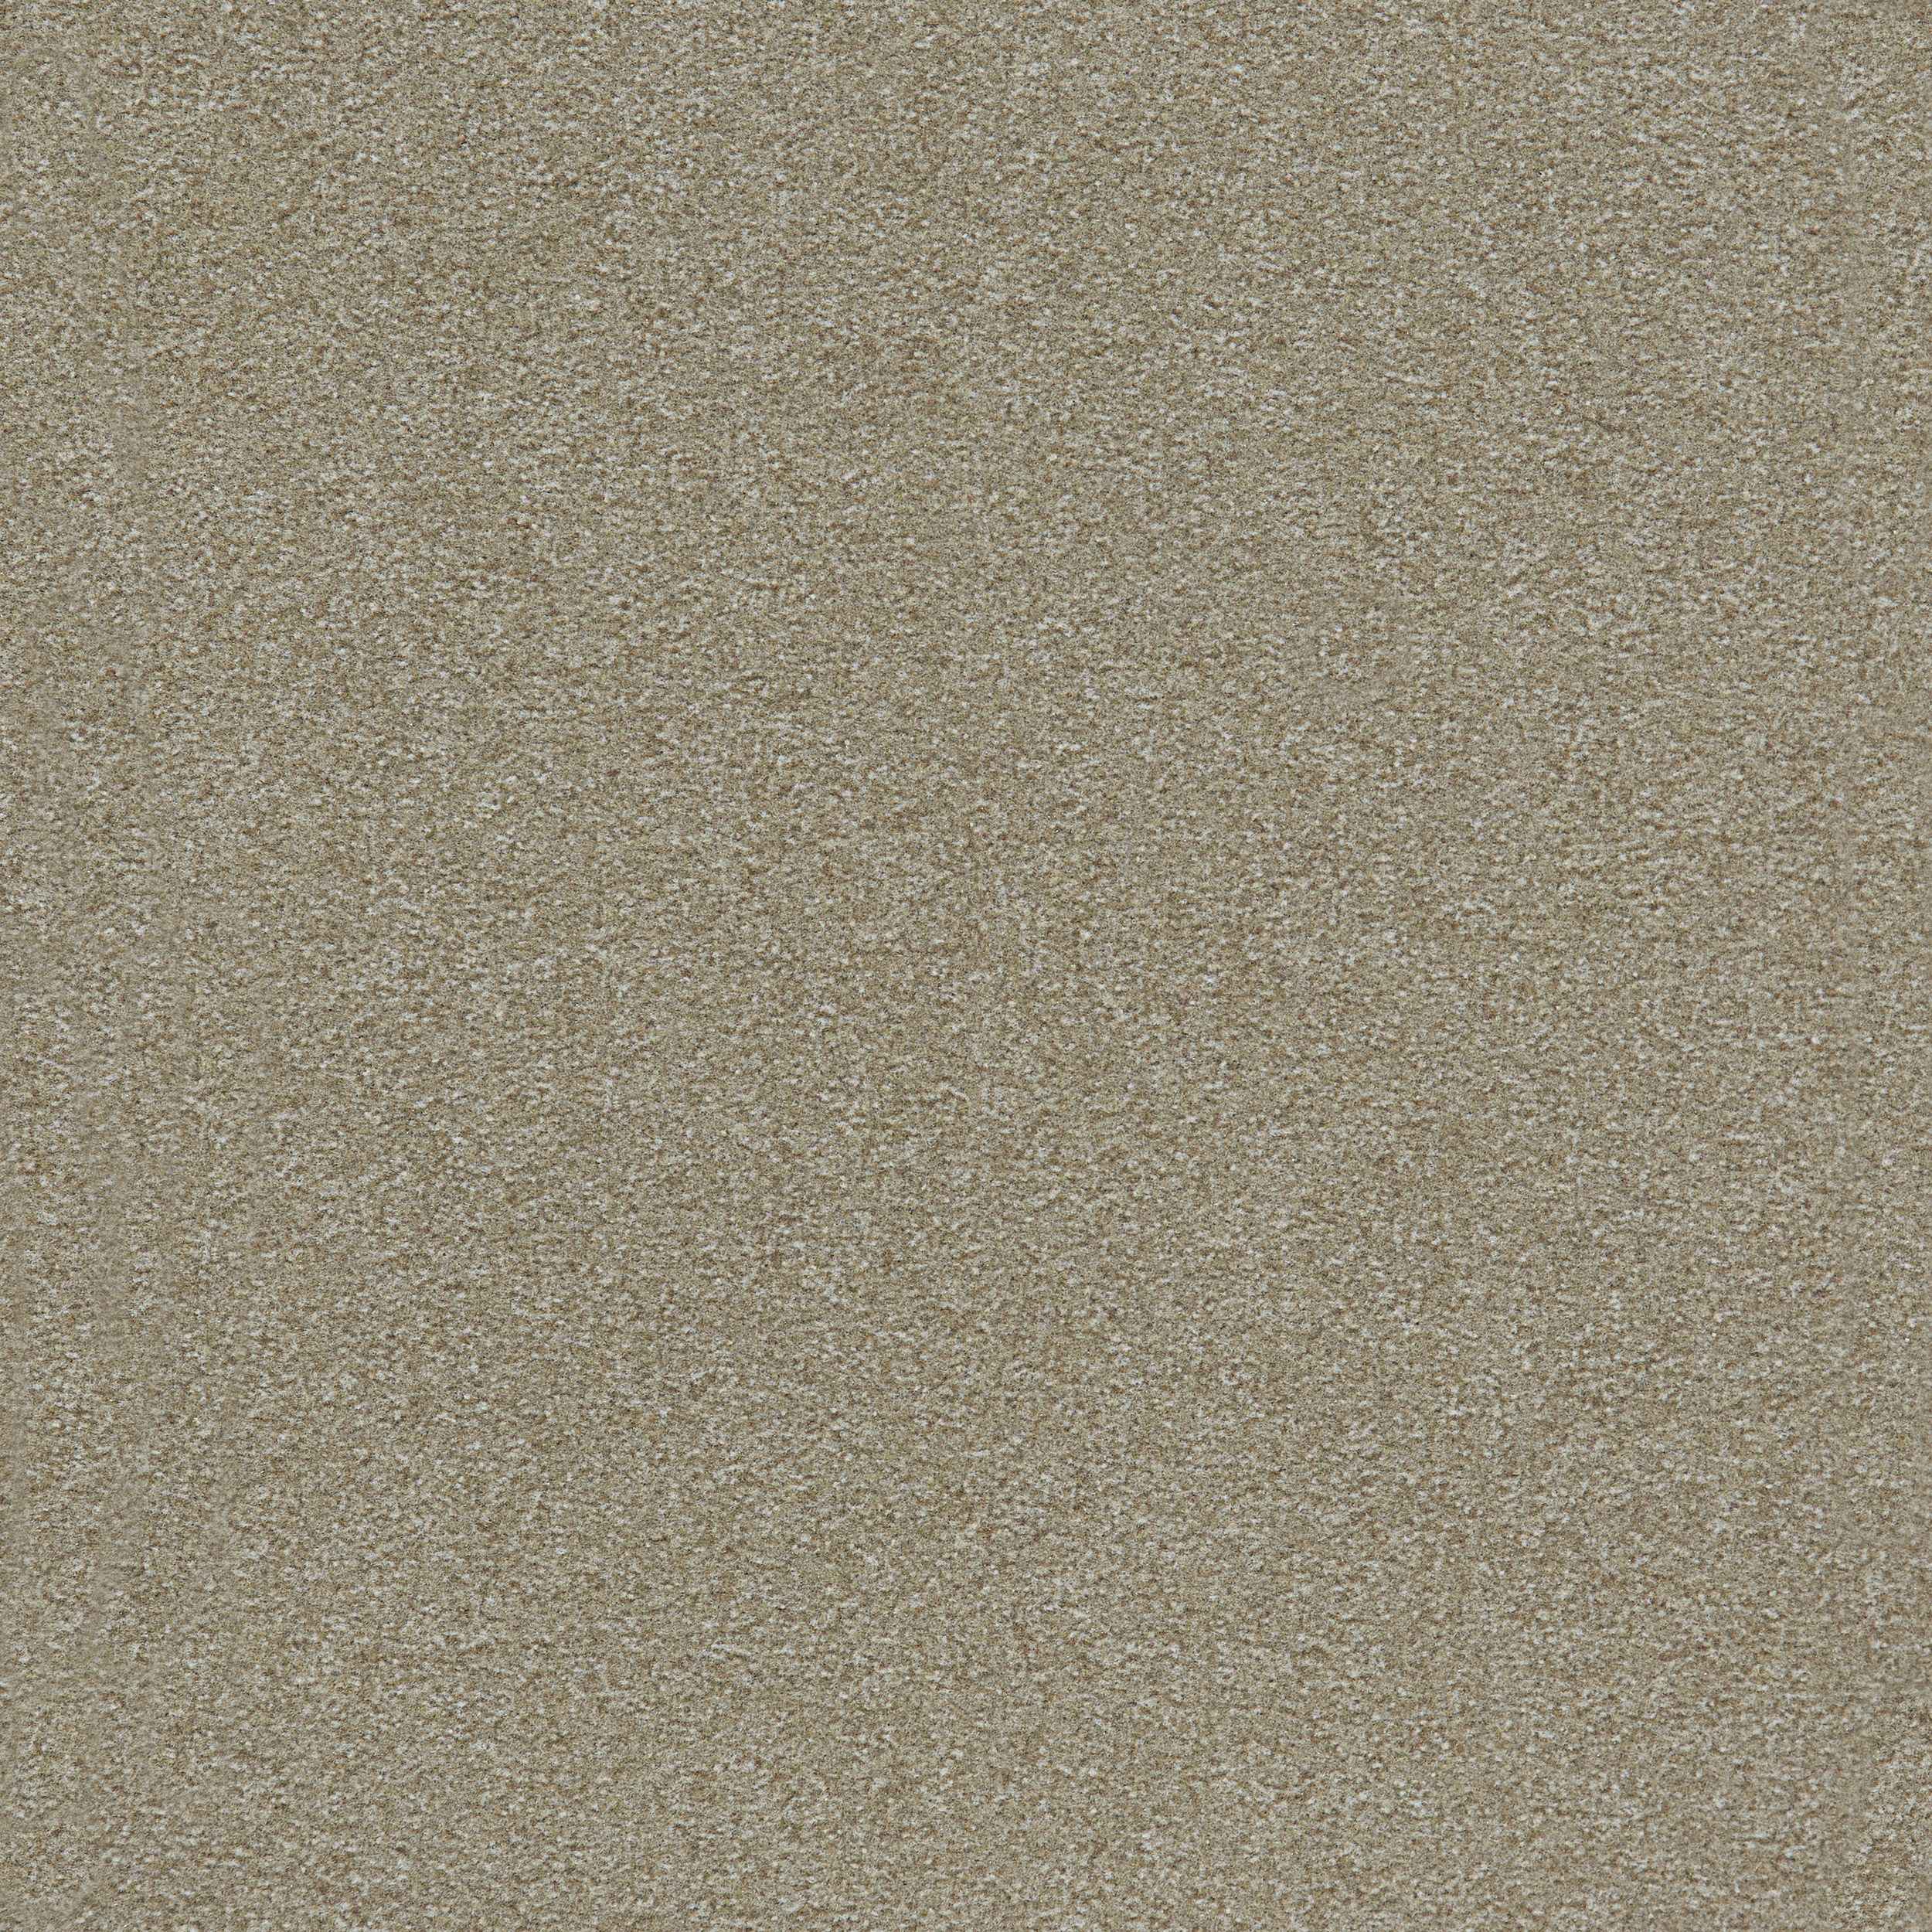 Heuga 725 Carpet Tile In Oyster afbeeldingnummer 6